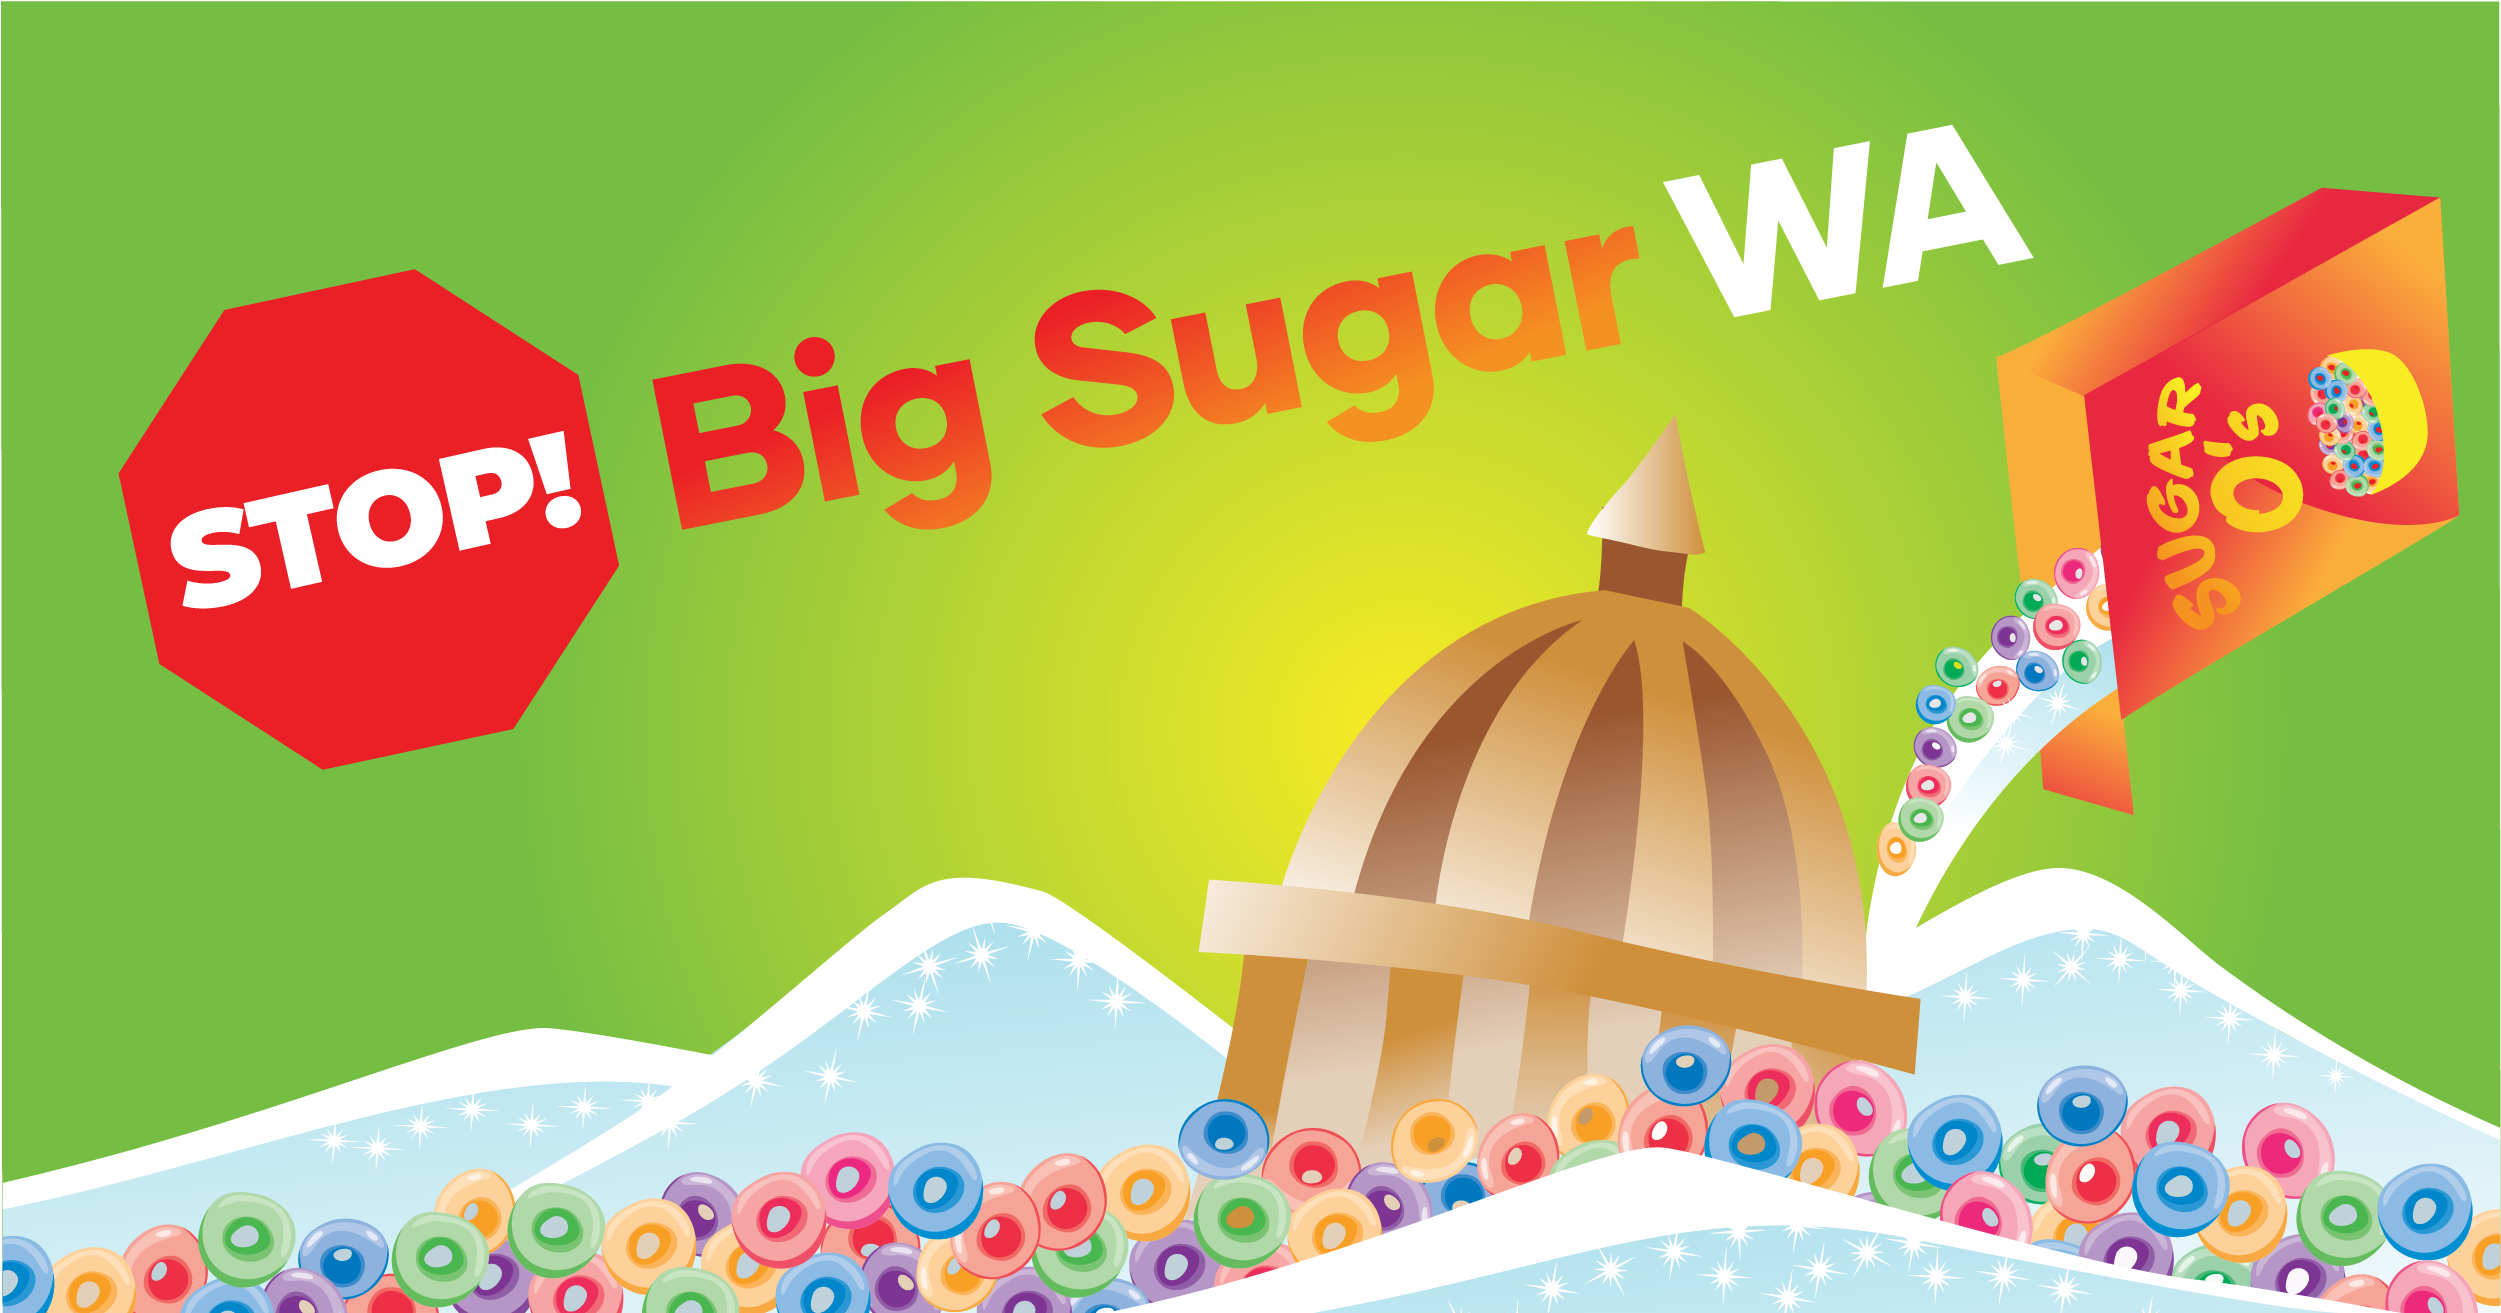 Stop Big Sugar WA